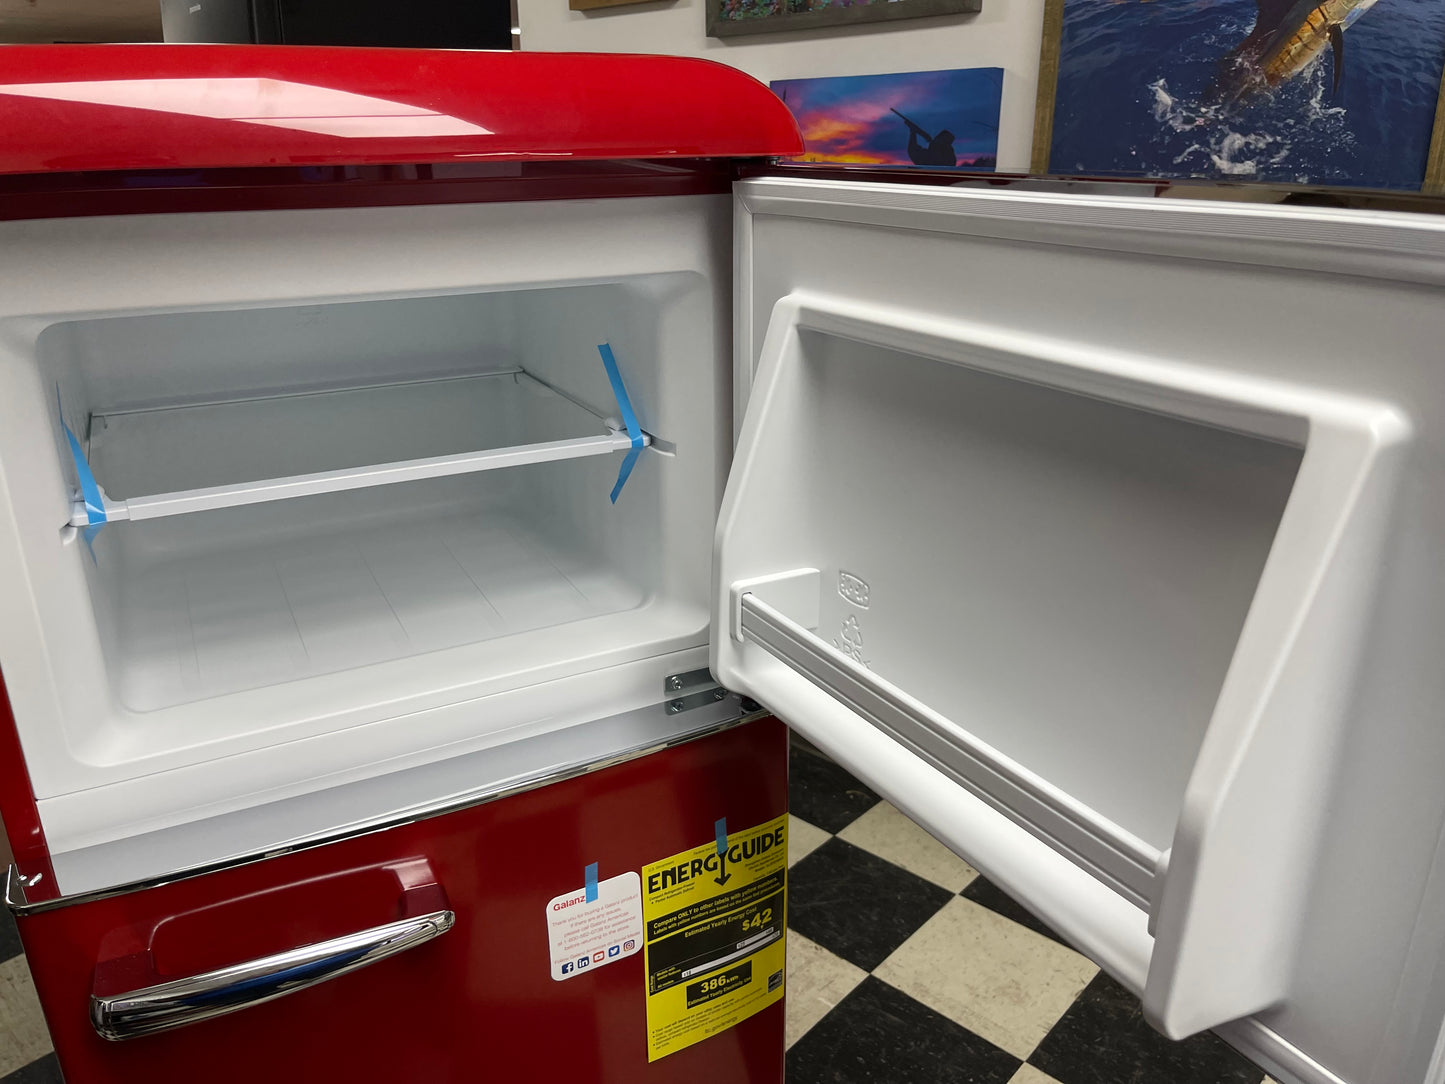 Galanz 7.5-cu Retro Top Freezer Refrigerator Frost Free in Red